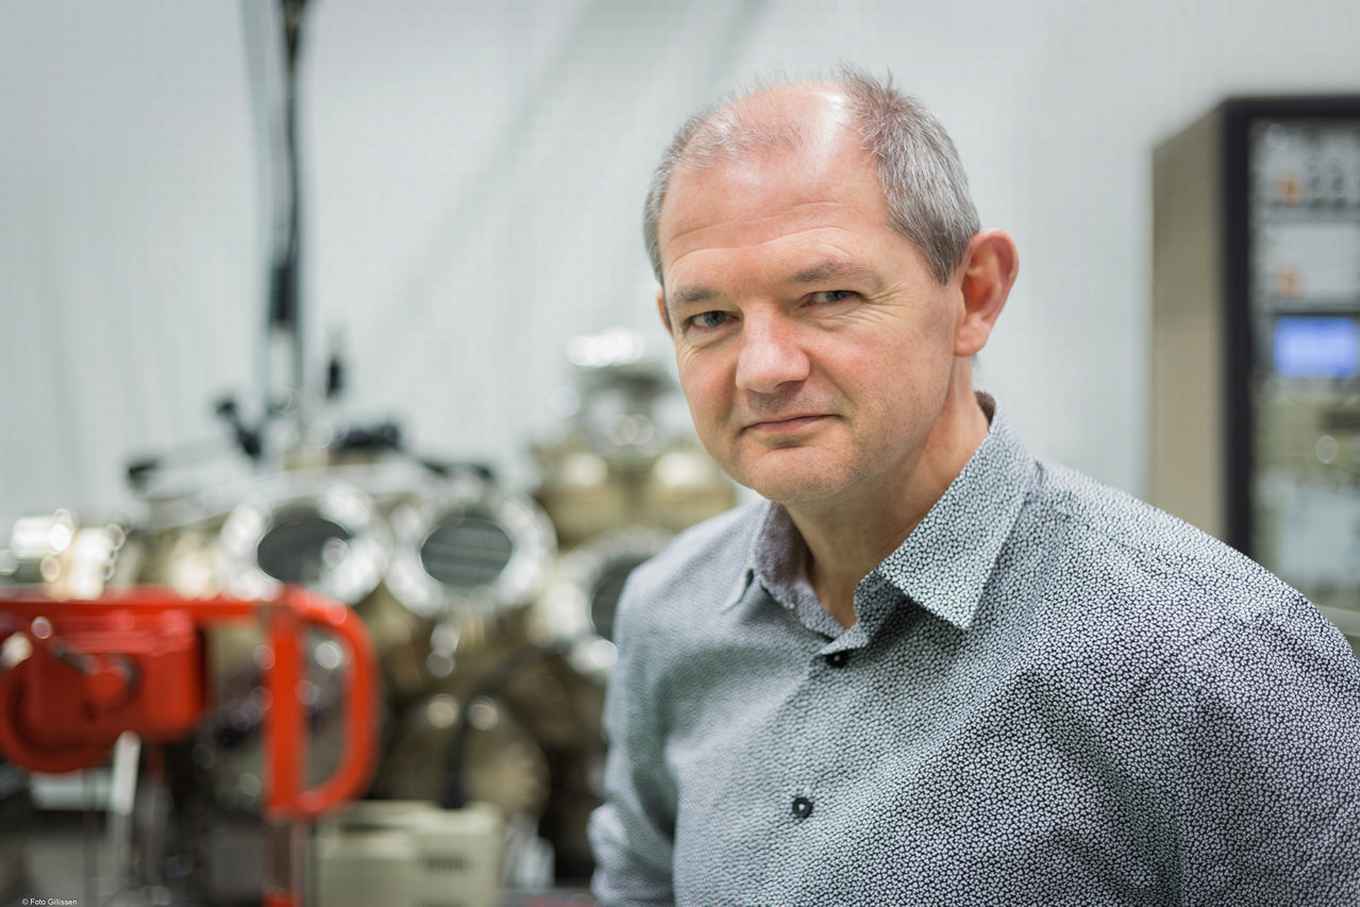 dhr. prof. dr. Joost Frenken, hoogleraar Nanoscale Surface Physics, FNWI, directeur ARCNL